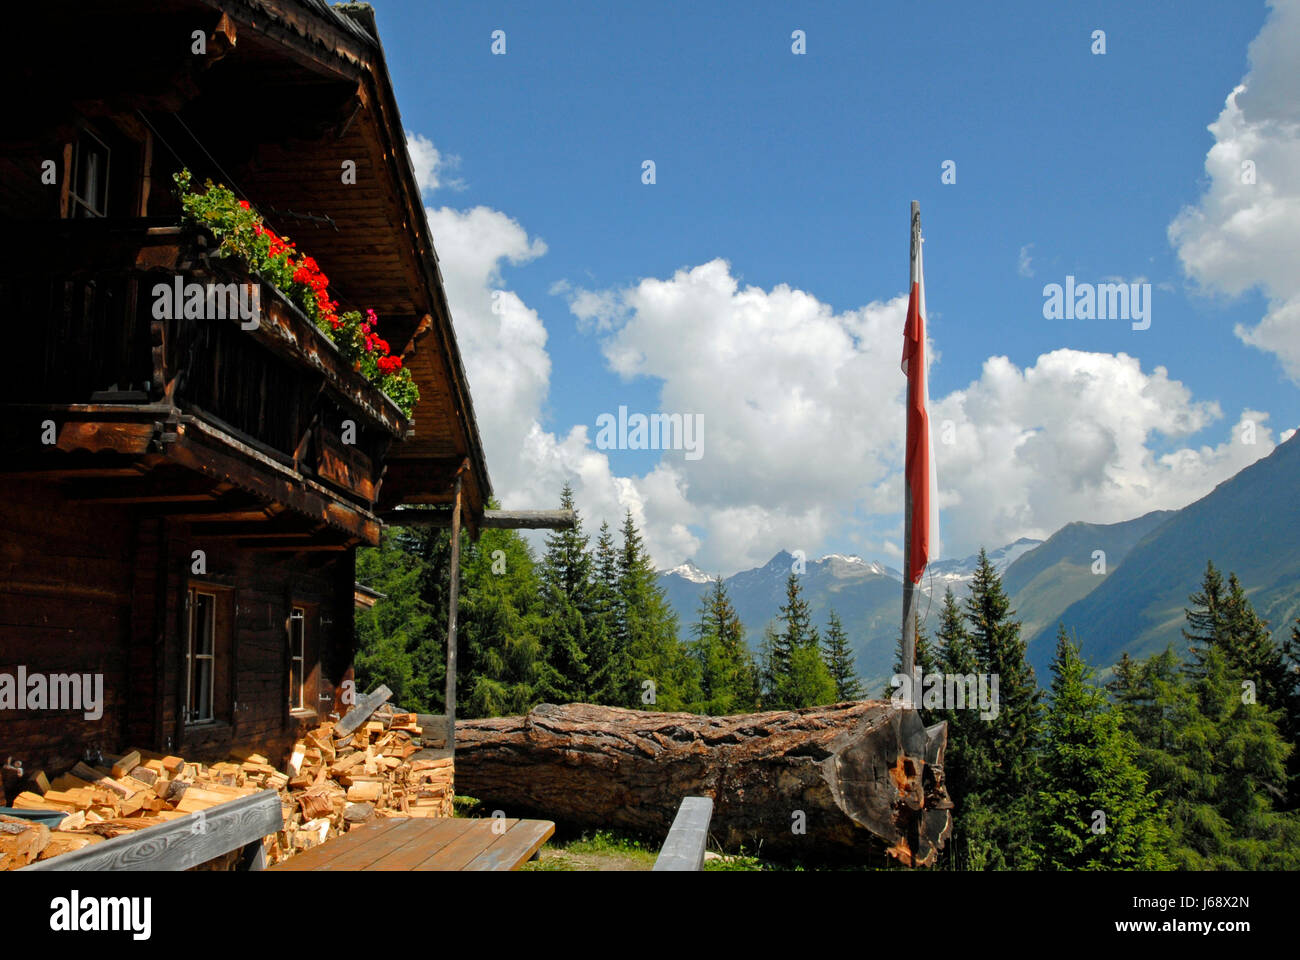 alps alp blockhouse mountain house building mountains wood national park trunk Stock Photo